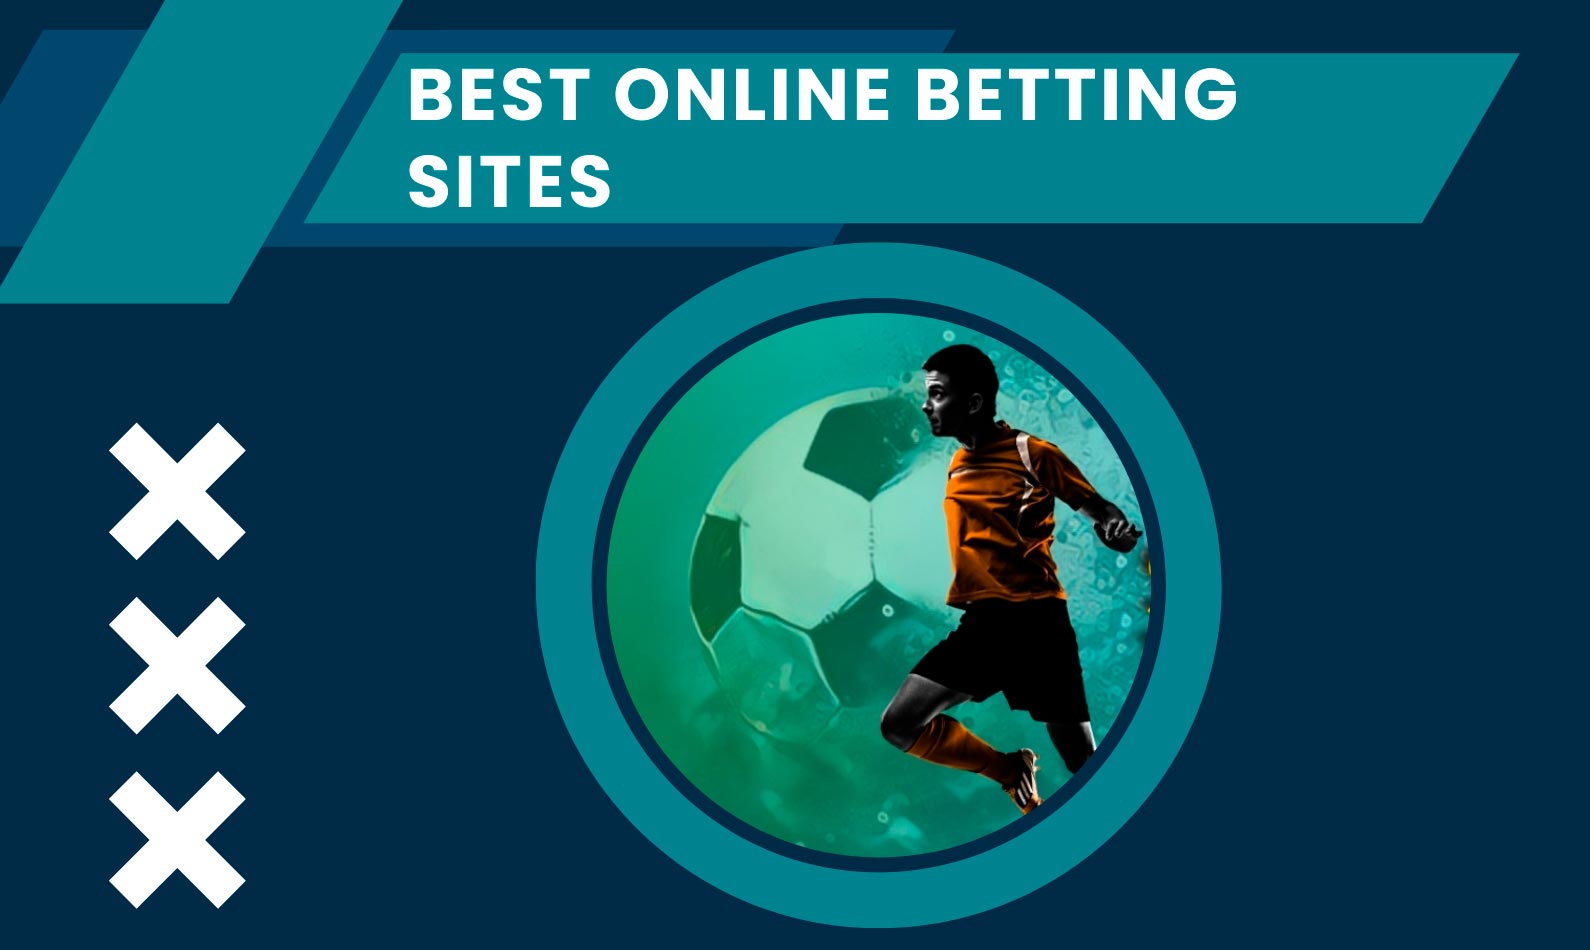 The best online betting platforms